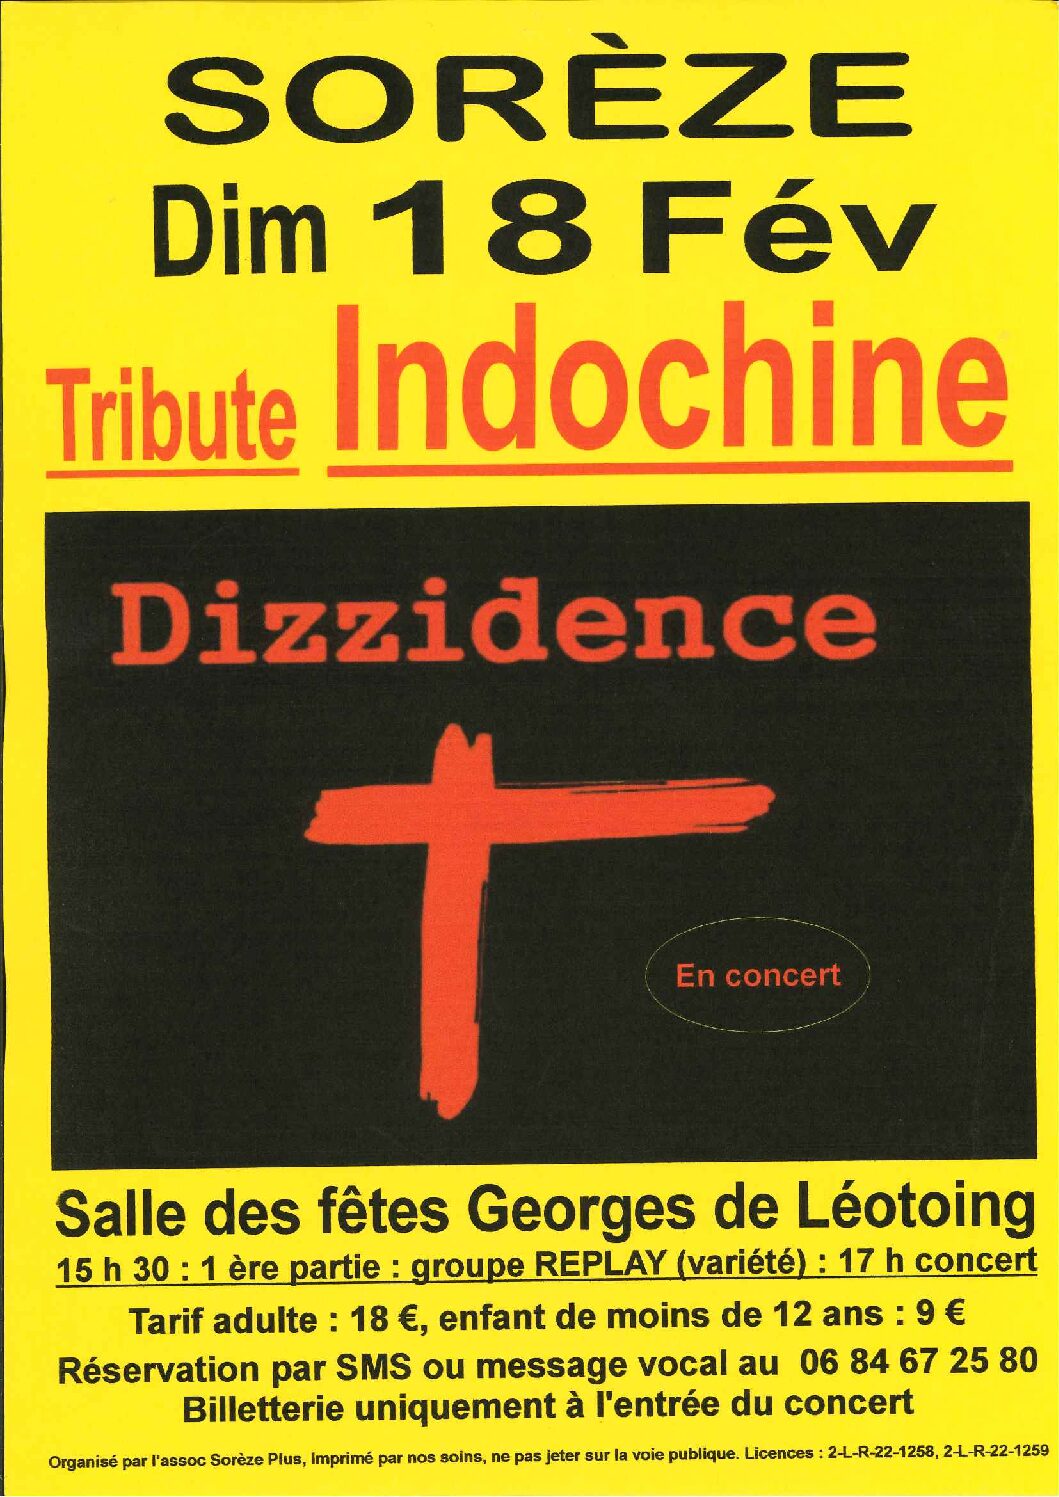 Concert : Dizzidence - tribute Indochine